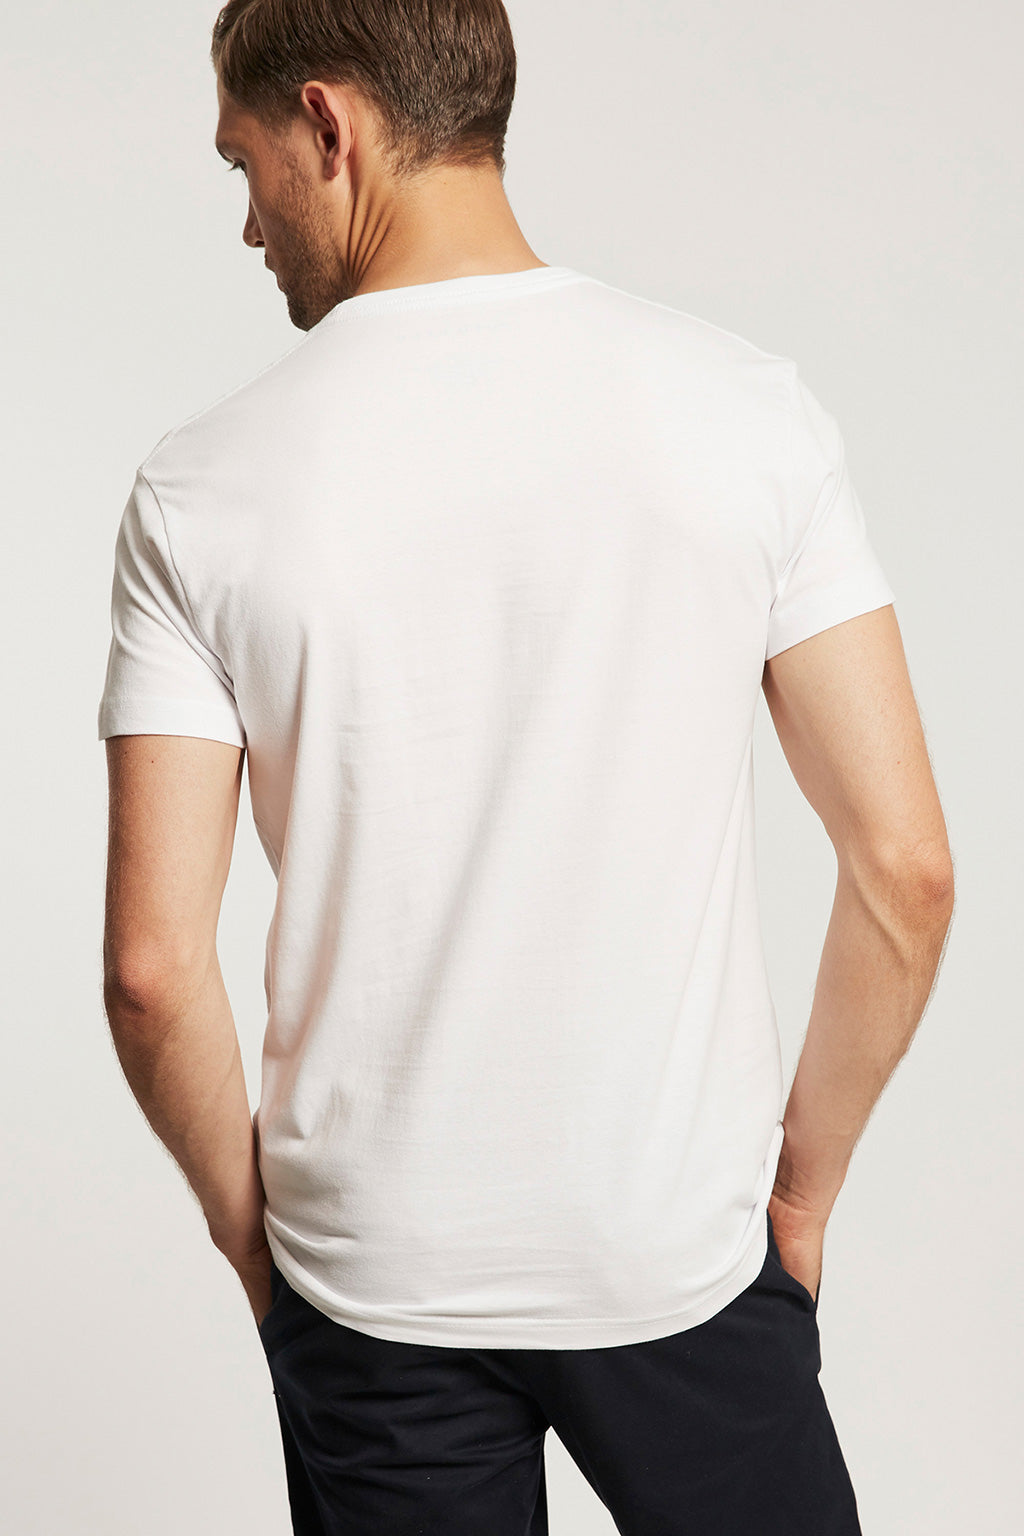 Camiseta blanca de manga corta con estampación